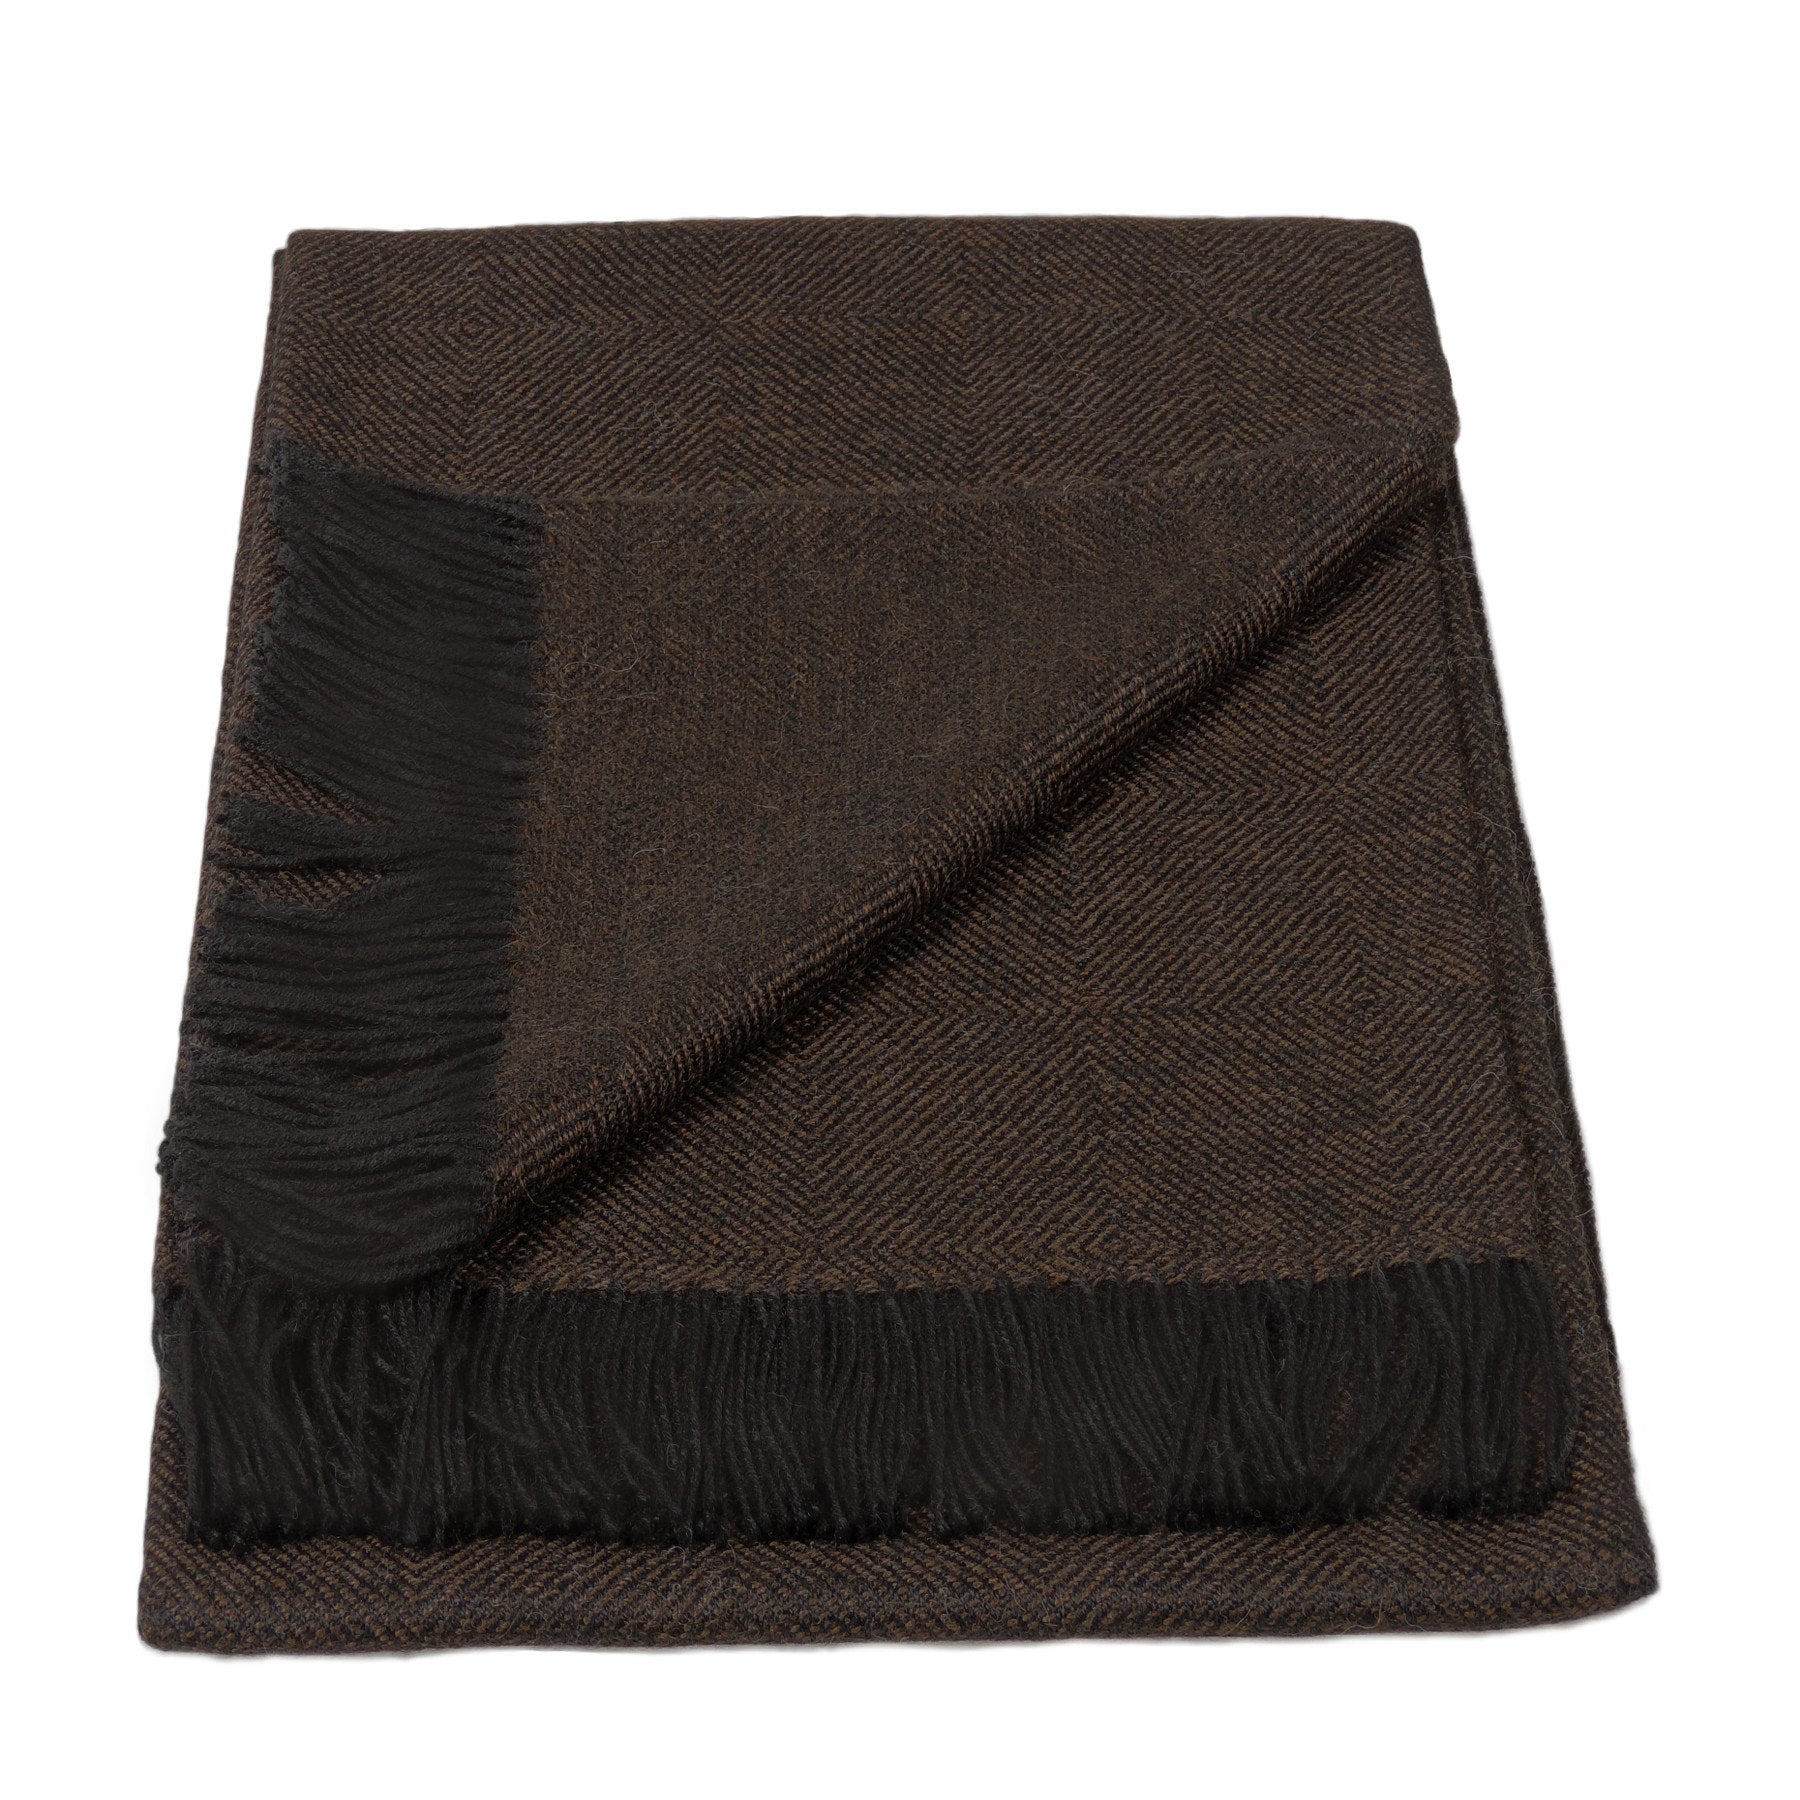 100% Baby Alpaca Geometric Throw Blanket in Black & Brown - Qinti - The Peruvian Shop